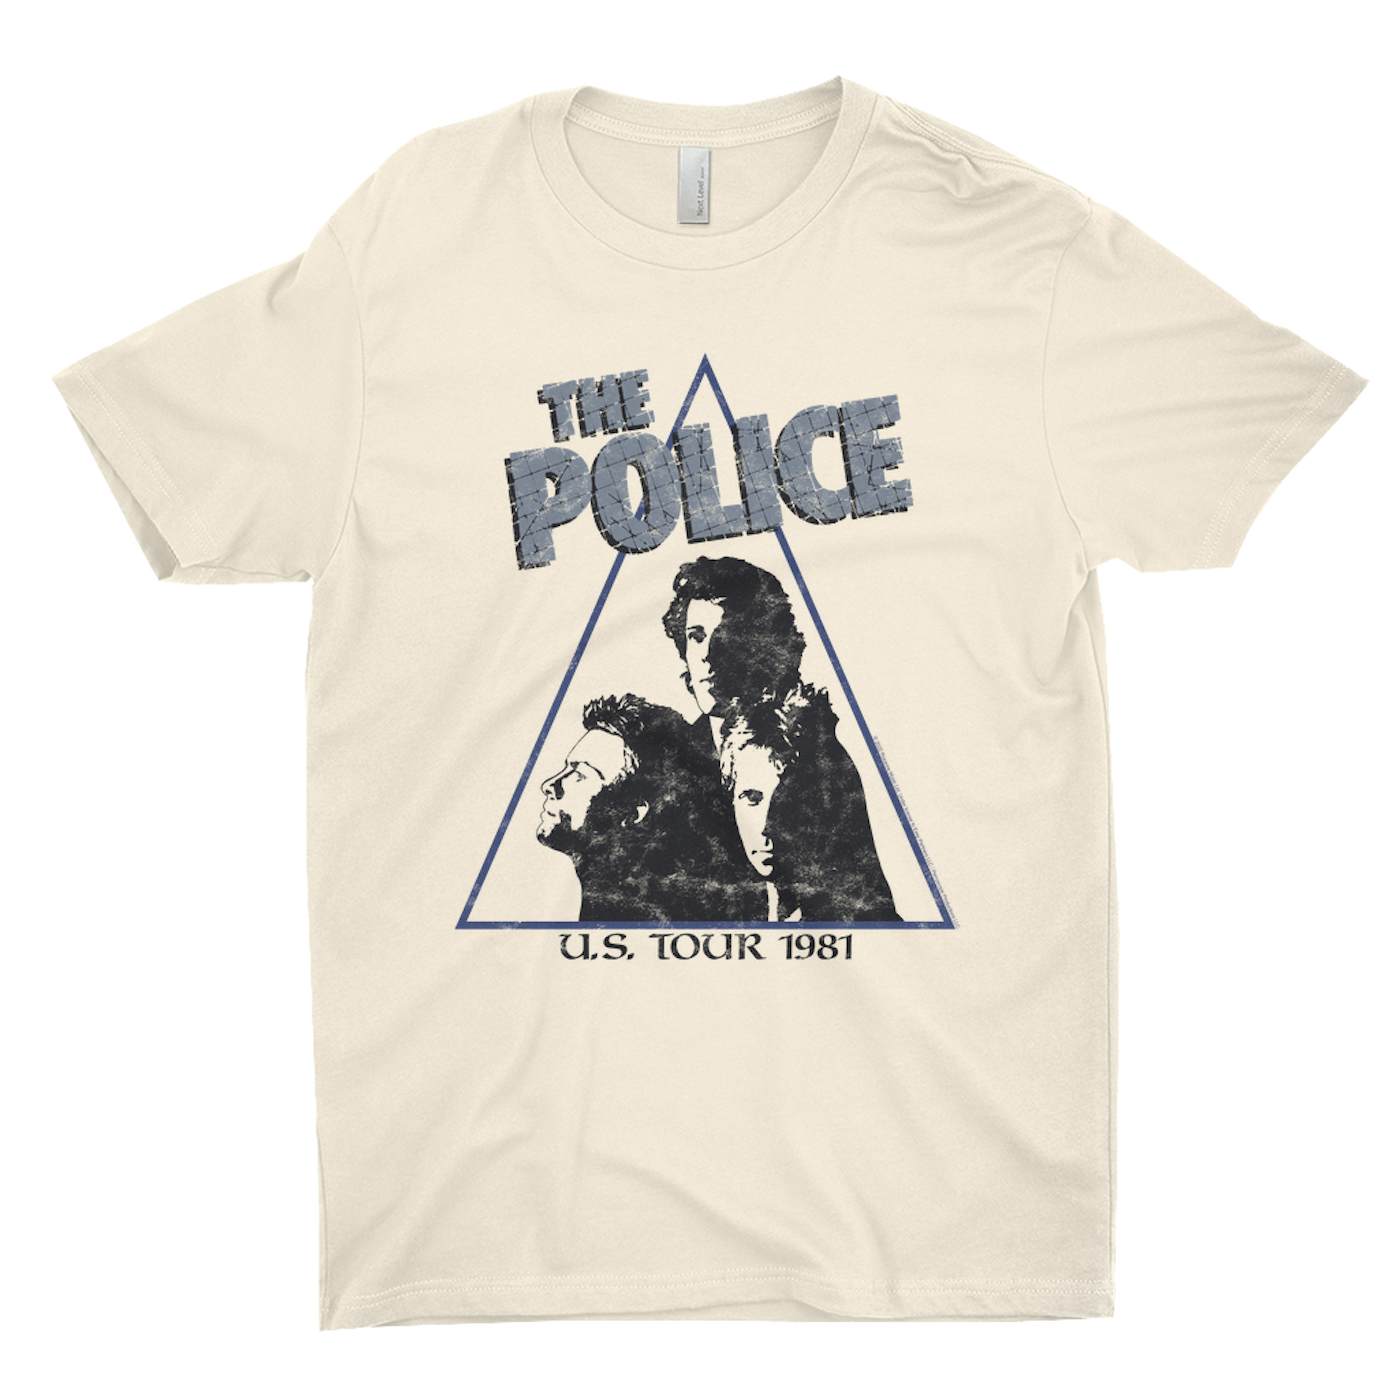 The Police T-Shirt | Zenyatta Mondatta 1981 U.S. Tour (Merchbar Exclusive) The Police Shirt